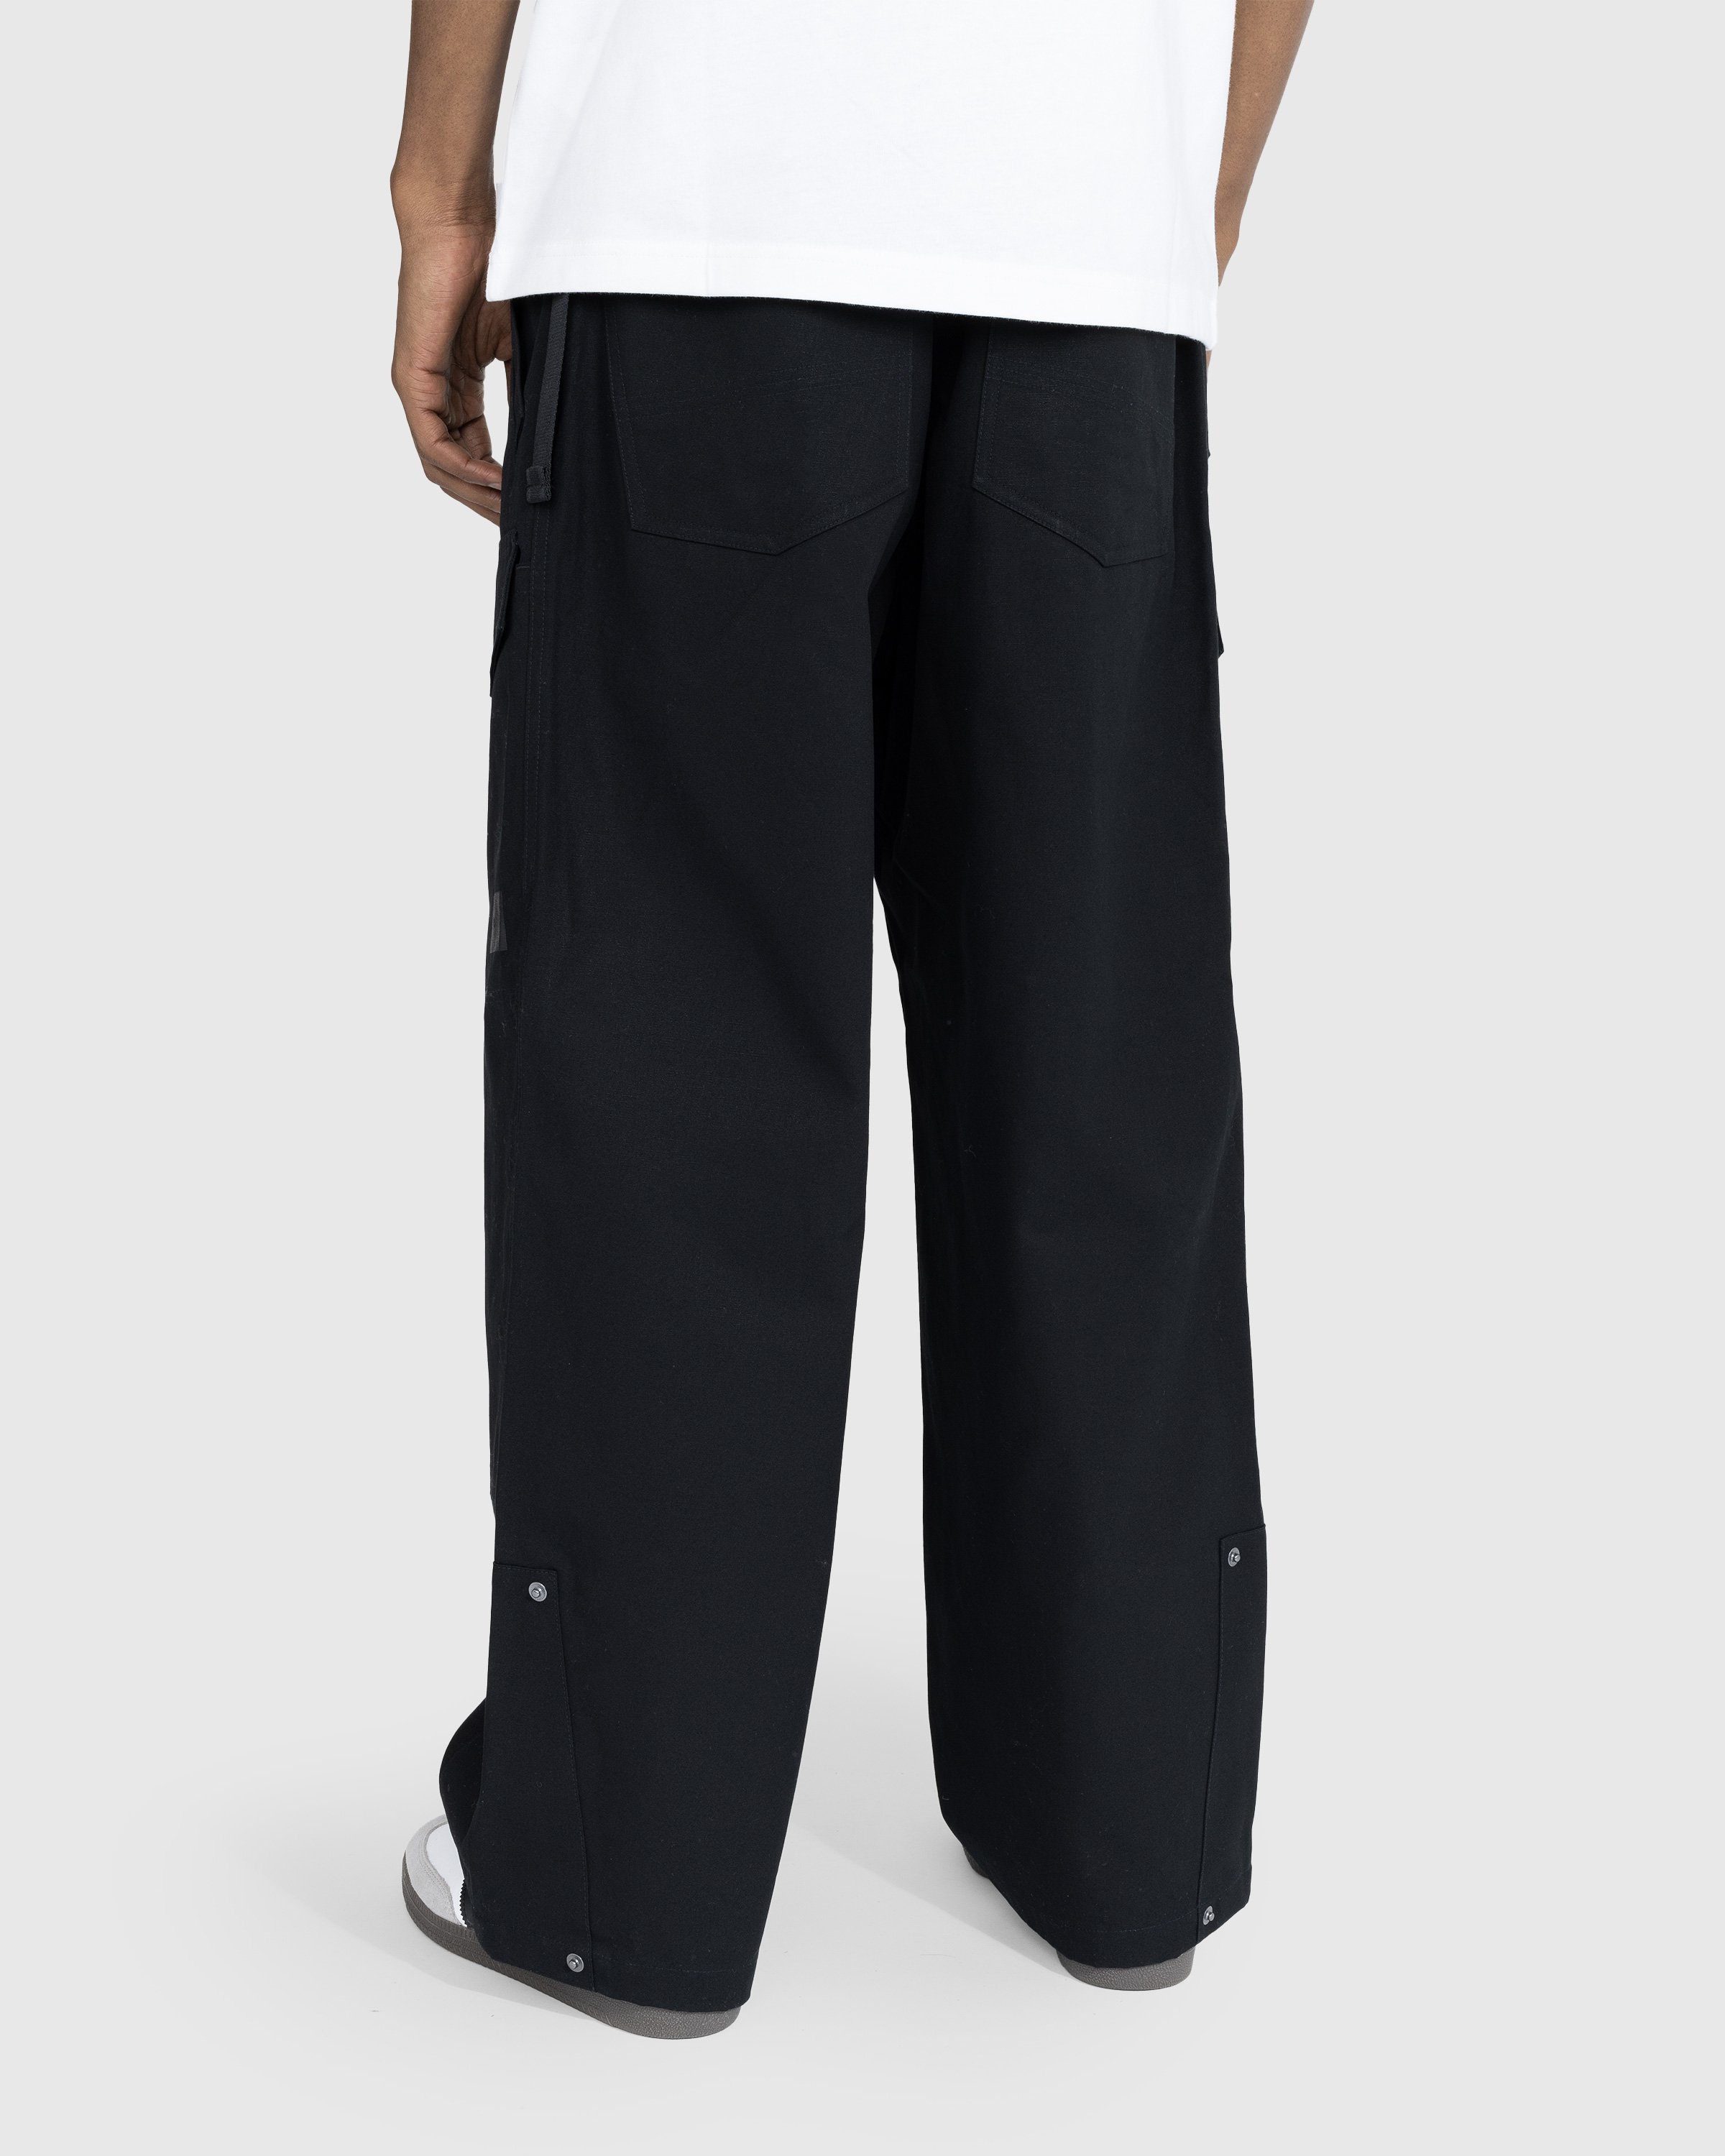 Y-3 - GFX Workwear Pants Black - Clothing - Black - Image 3